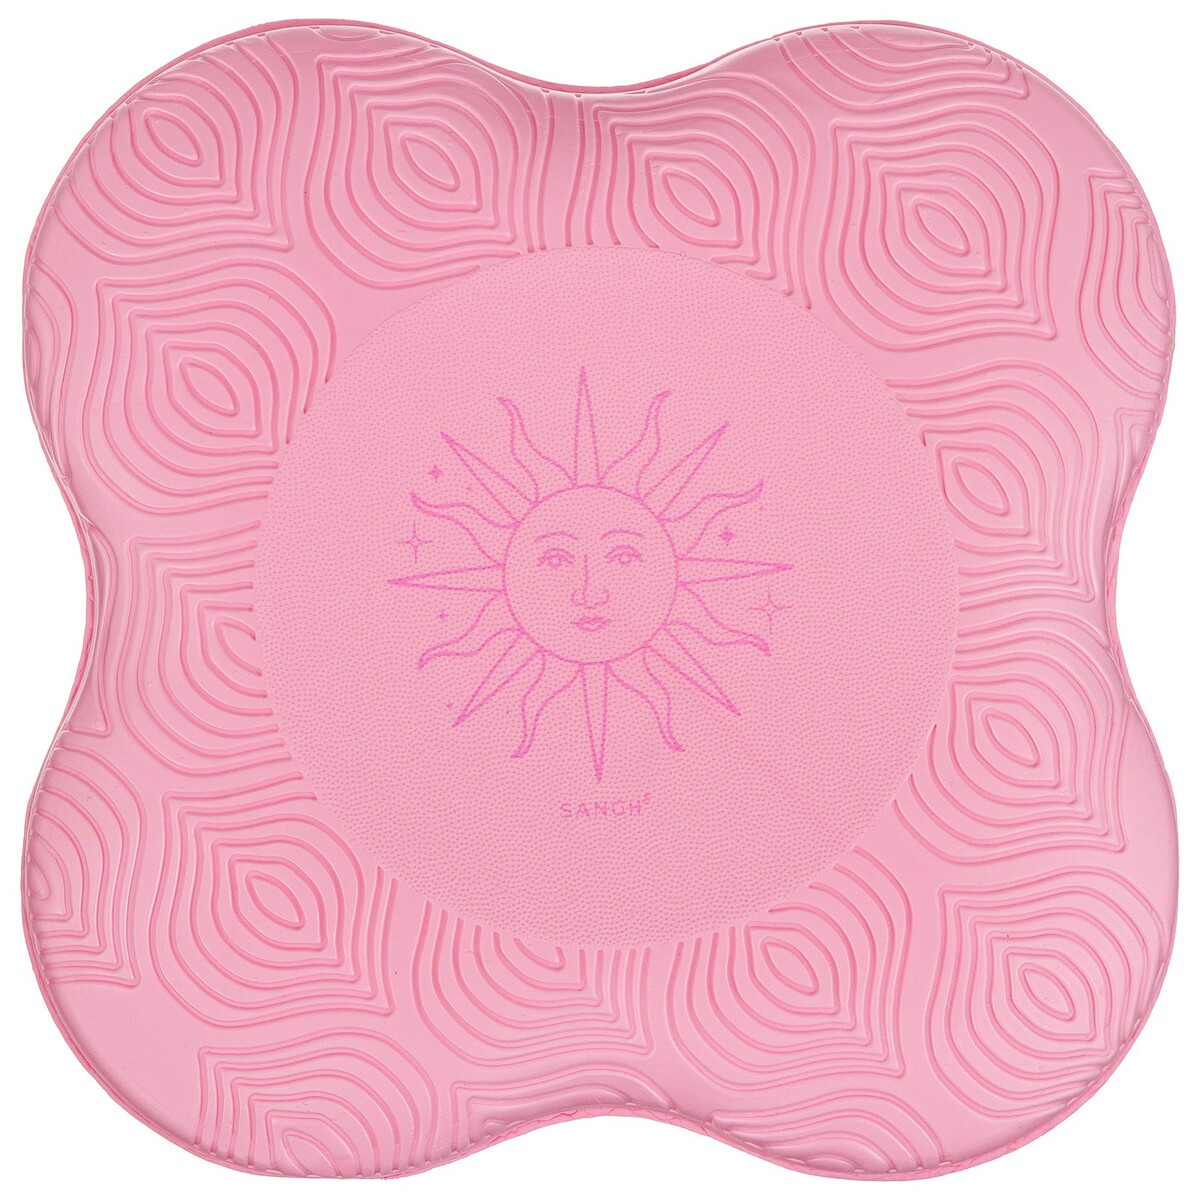 Коврик под колени для йоги sangh sun, 20х20 см, цвет розовый коврик гимнастический body form 173x61x0 6 см bf ym01 розовый